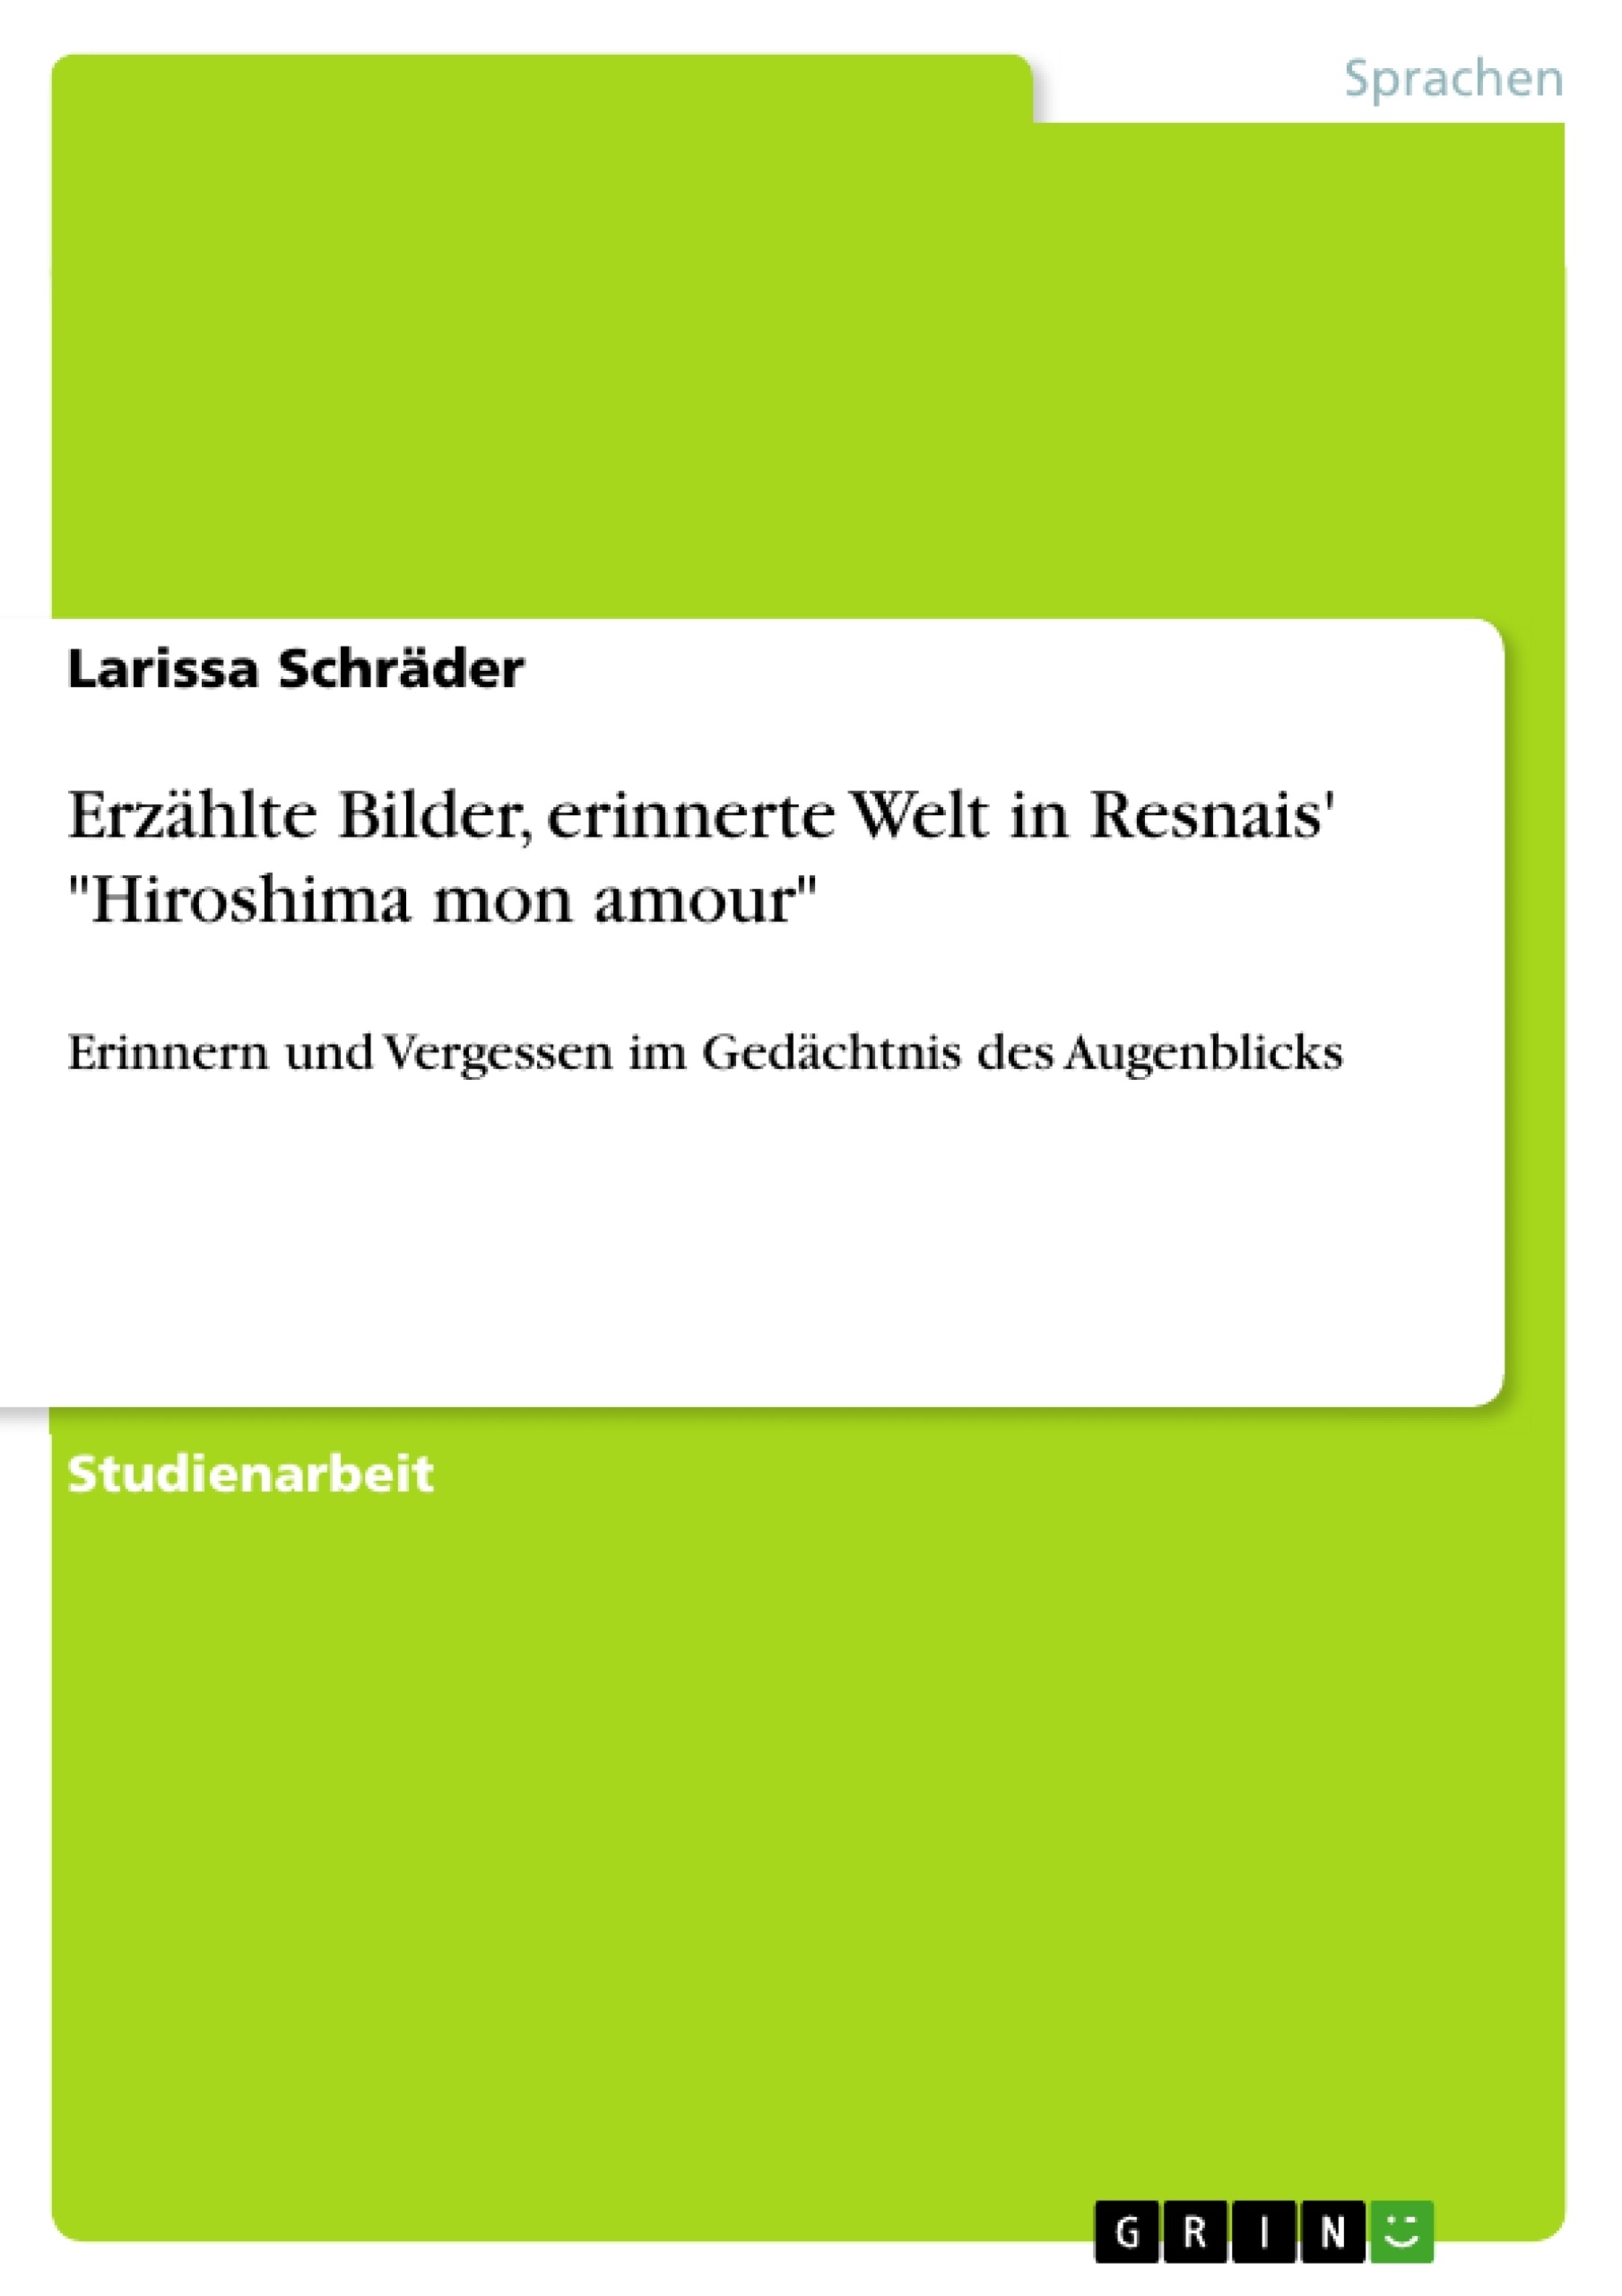 Title: Erzählte Bilder, erinnerte Welt in Resnais' "Hiroshima mon amour"